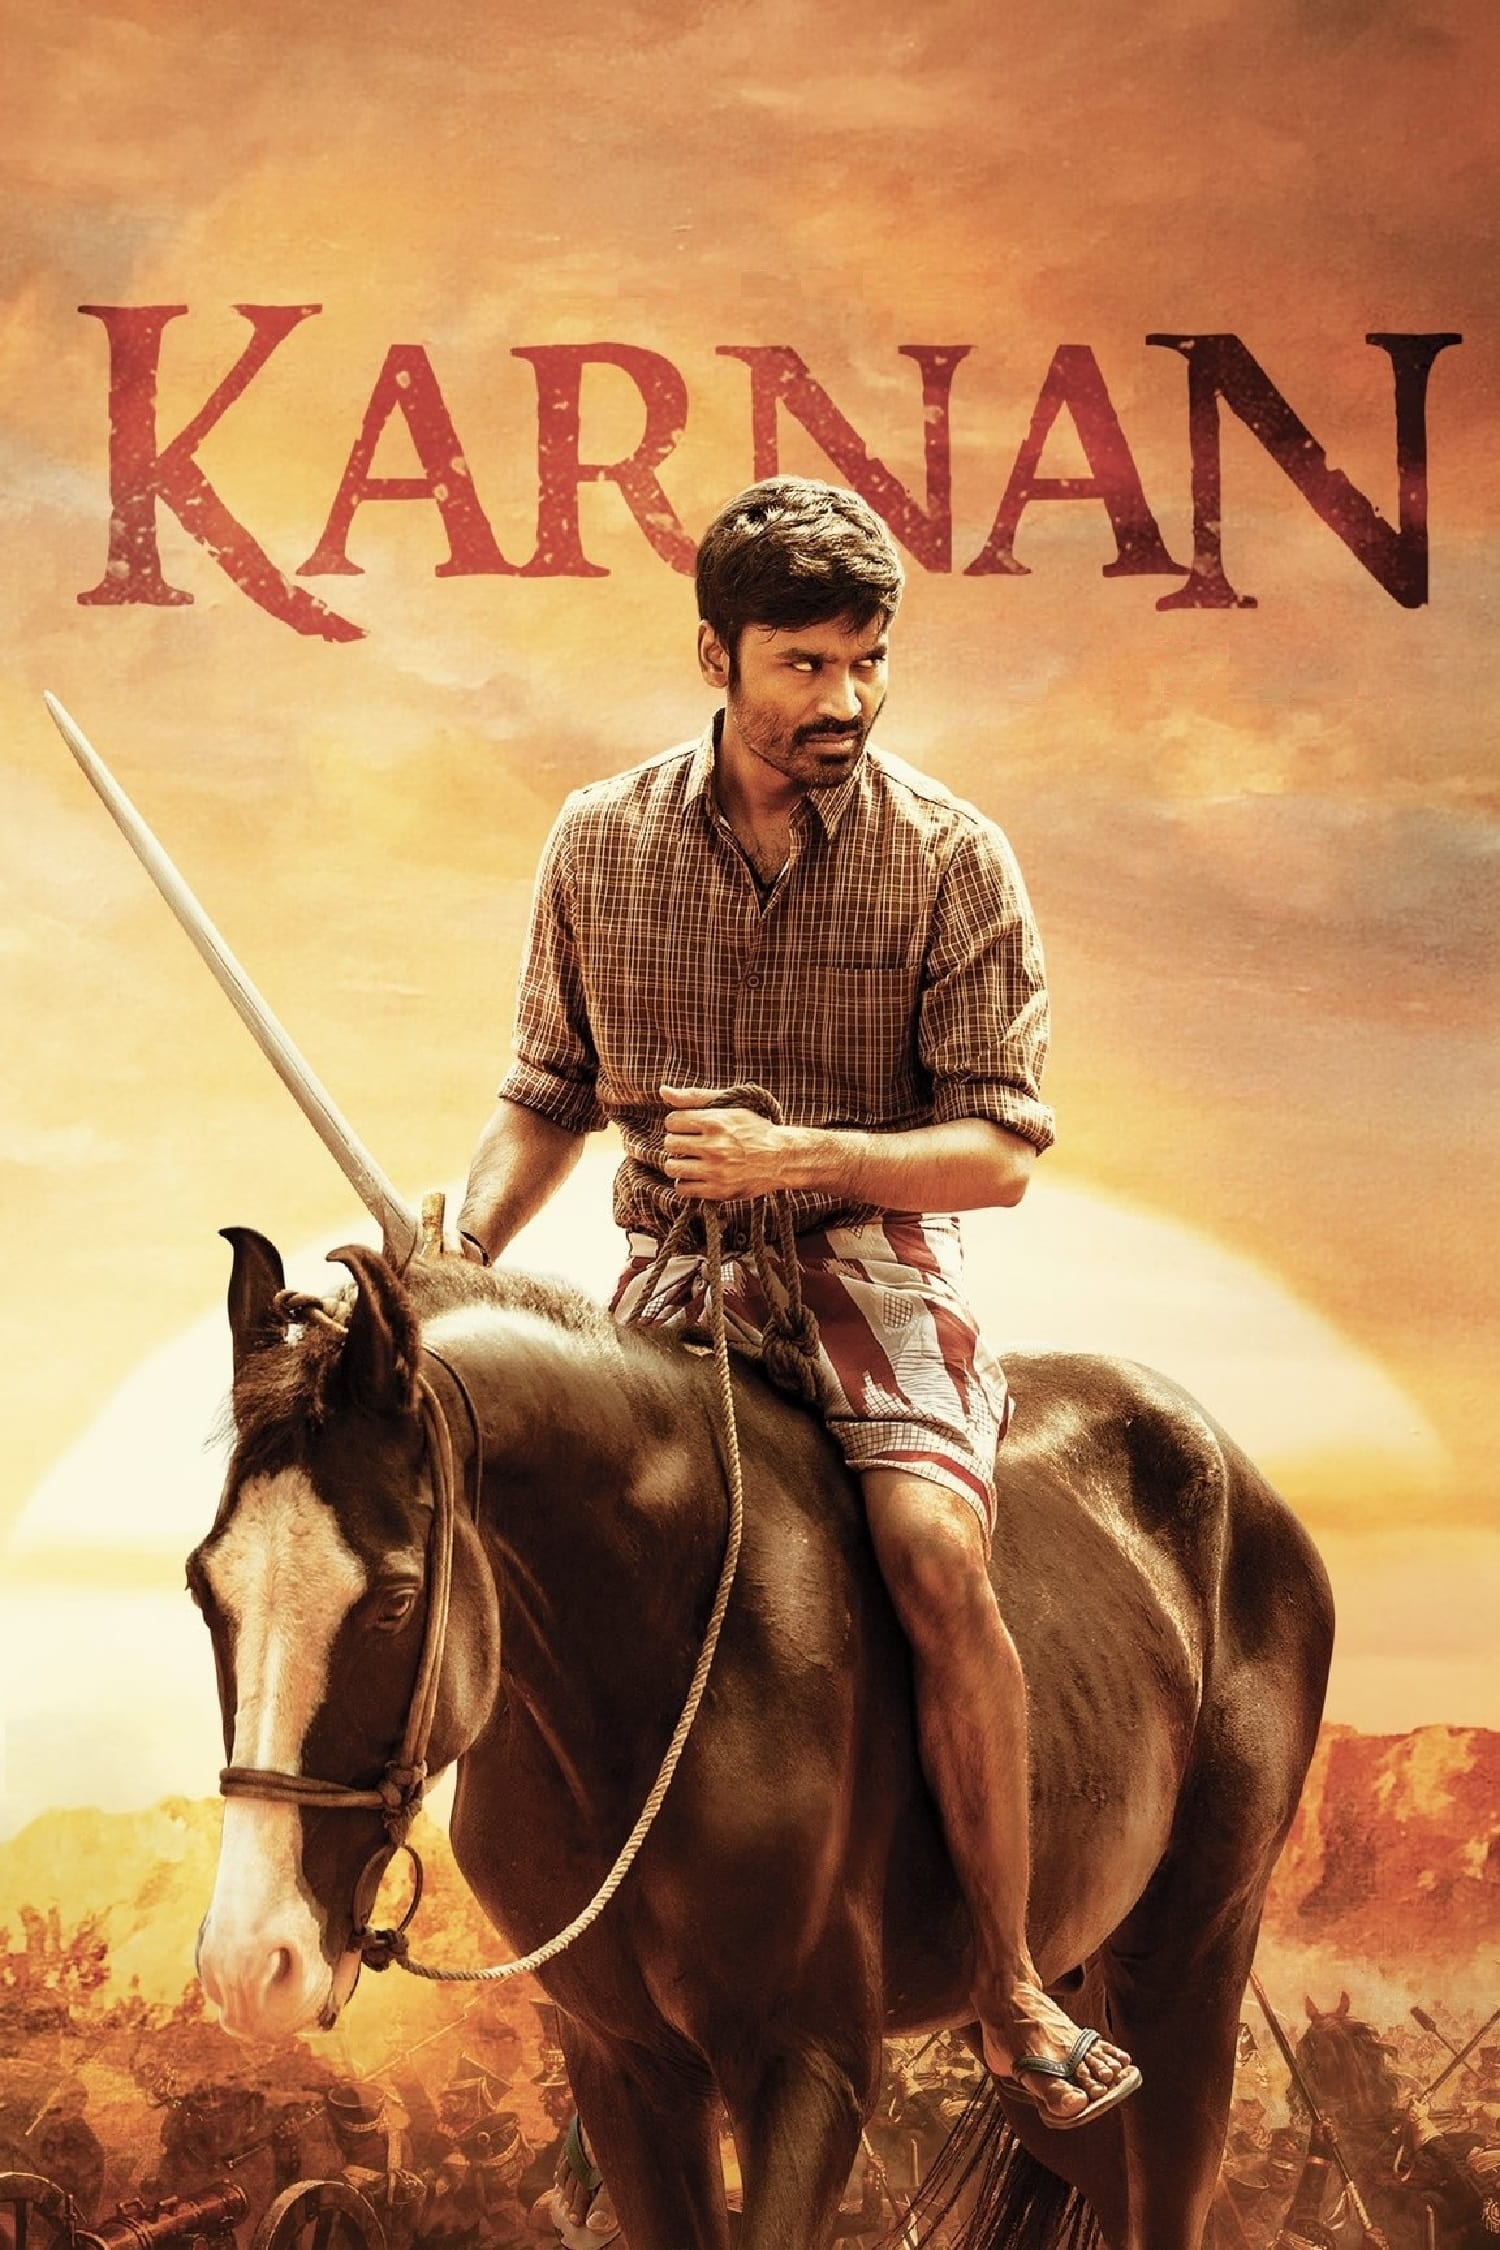 Poster for the movie "Karnan"